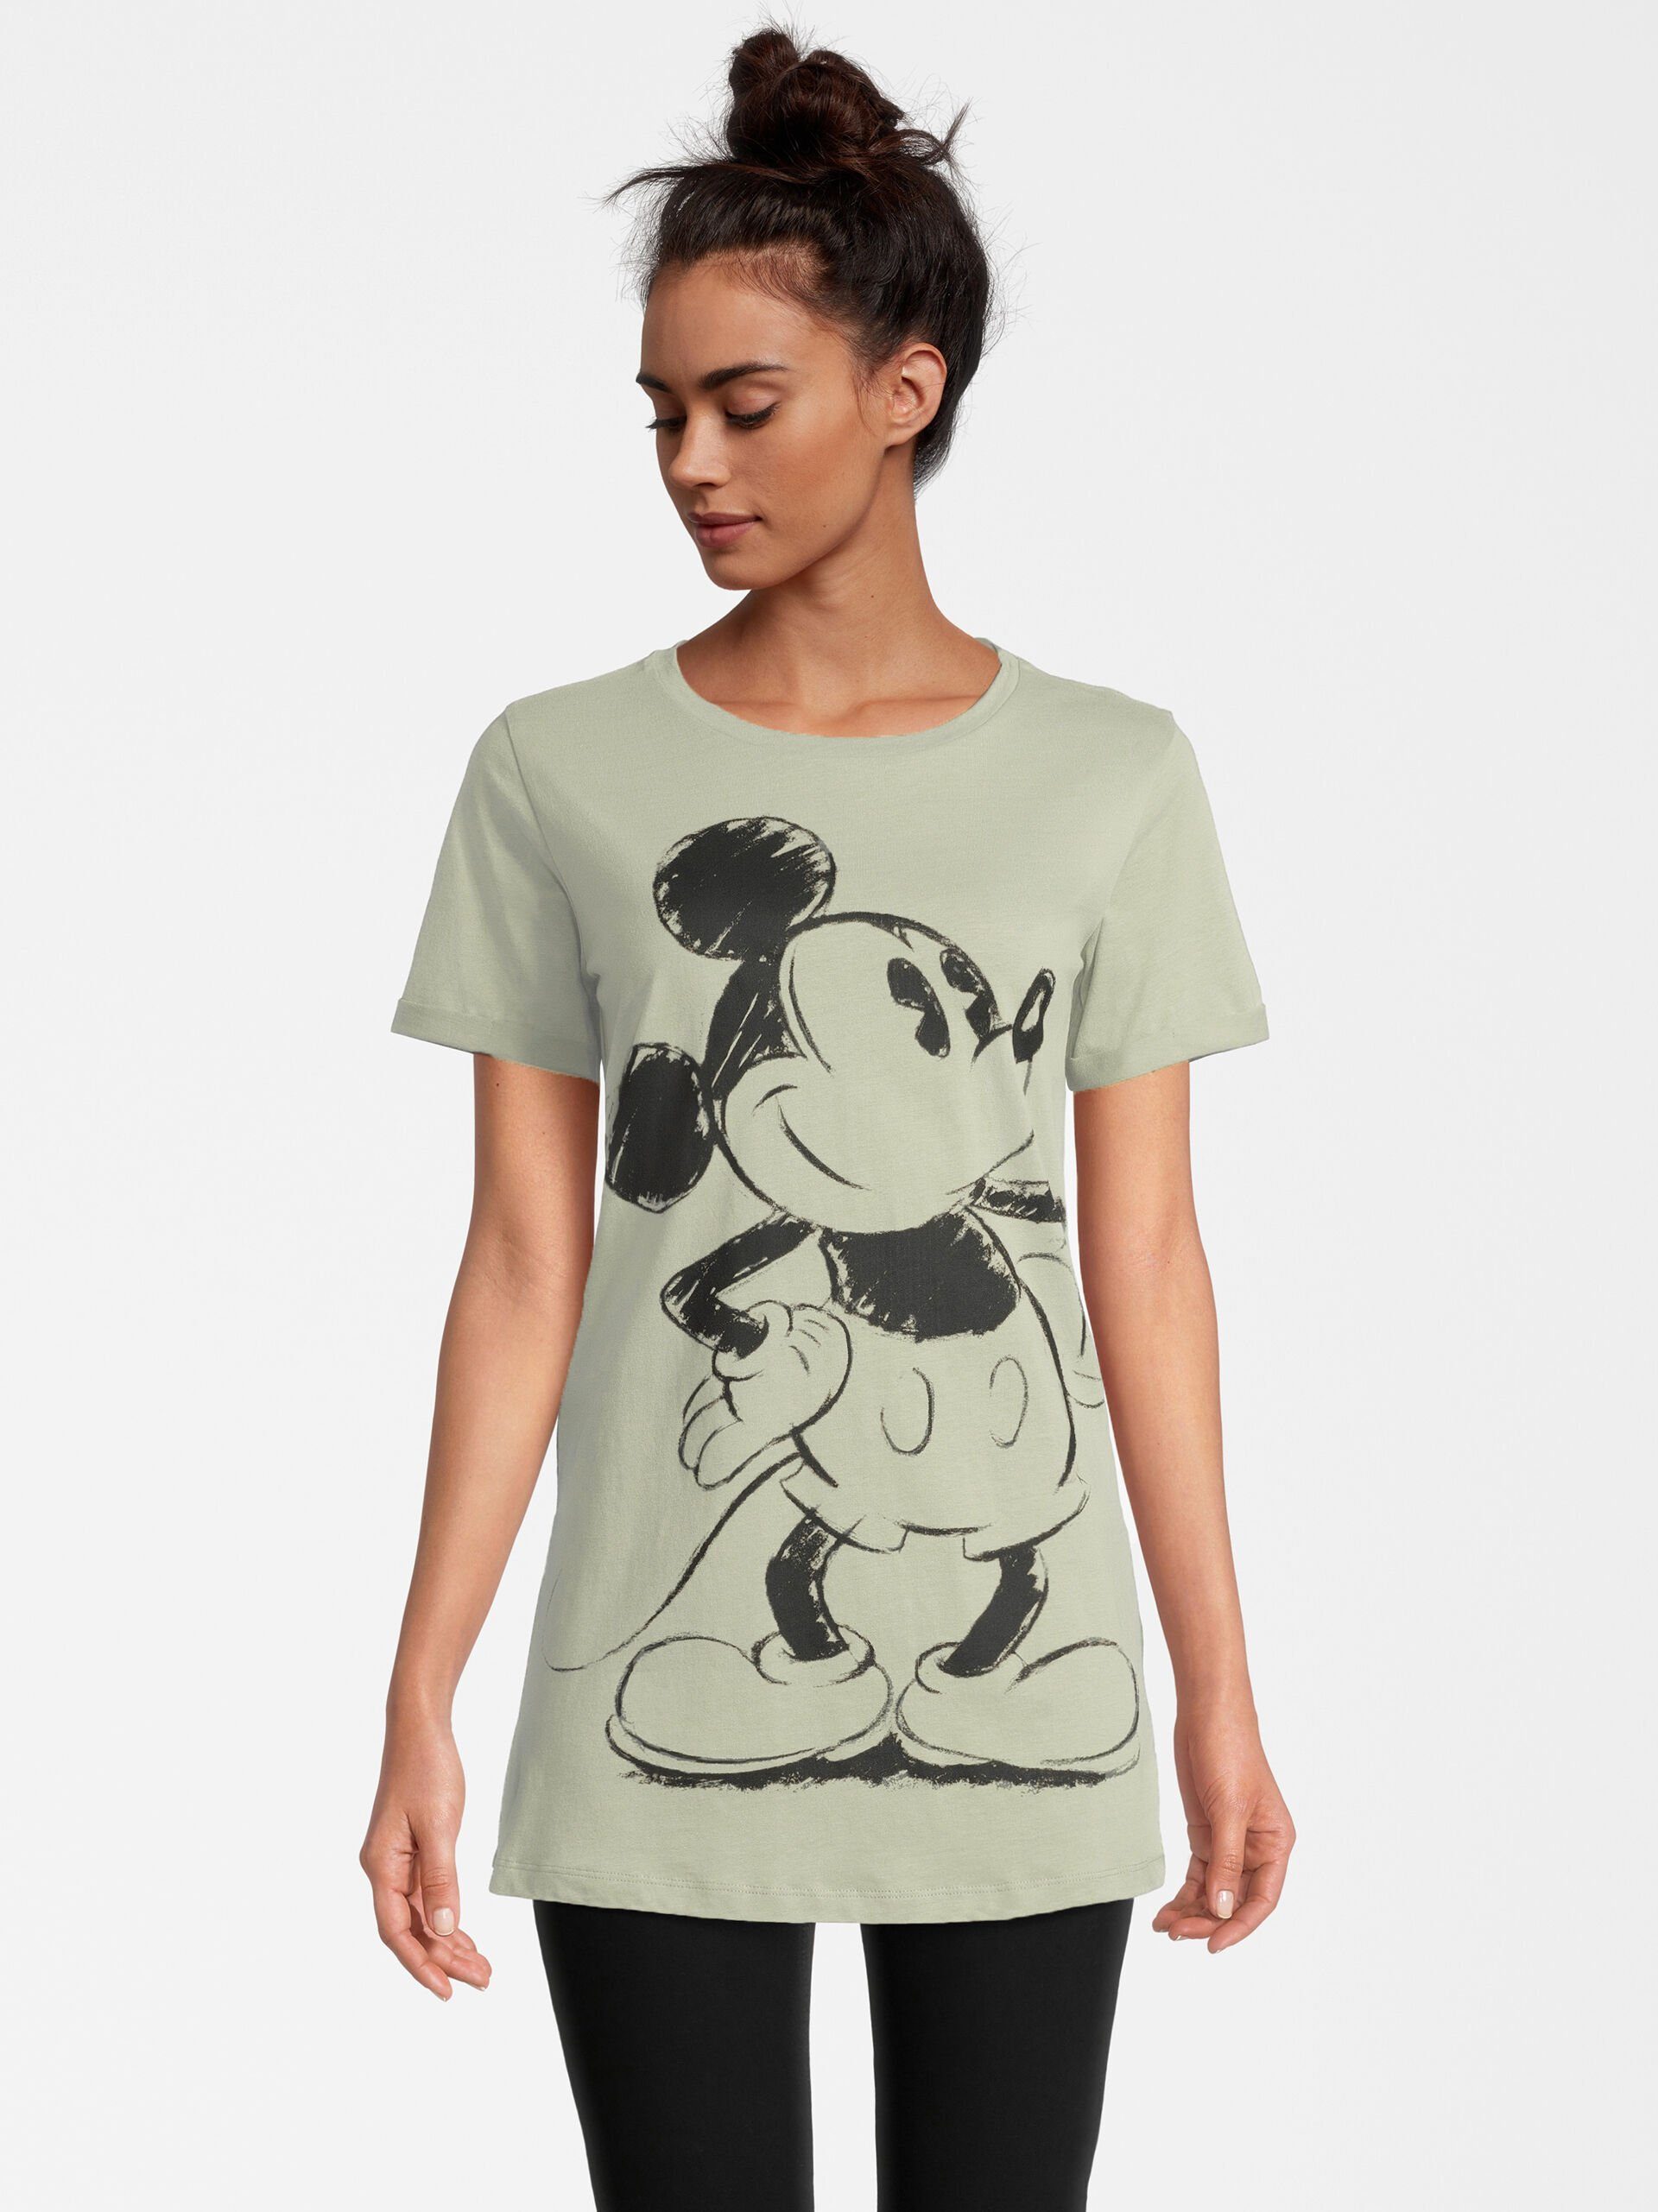 COURSE Longshirt salbeigrün Mickey Mouse